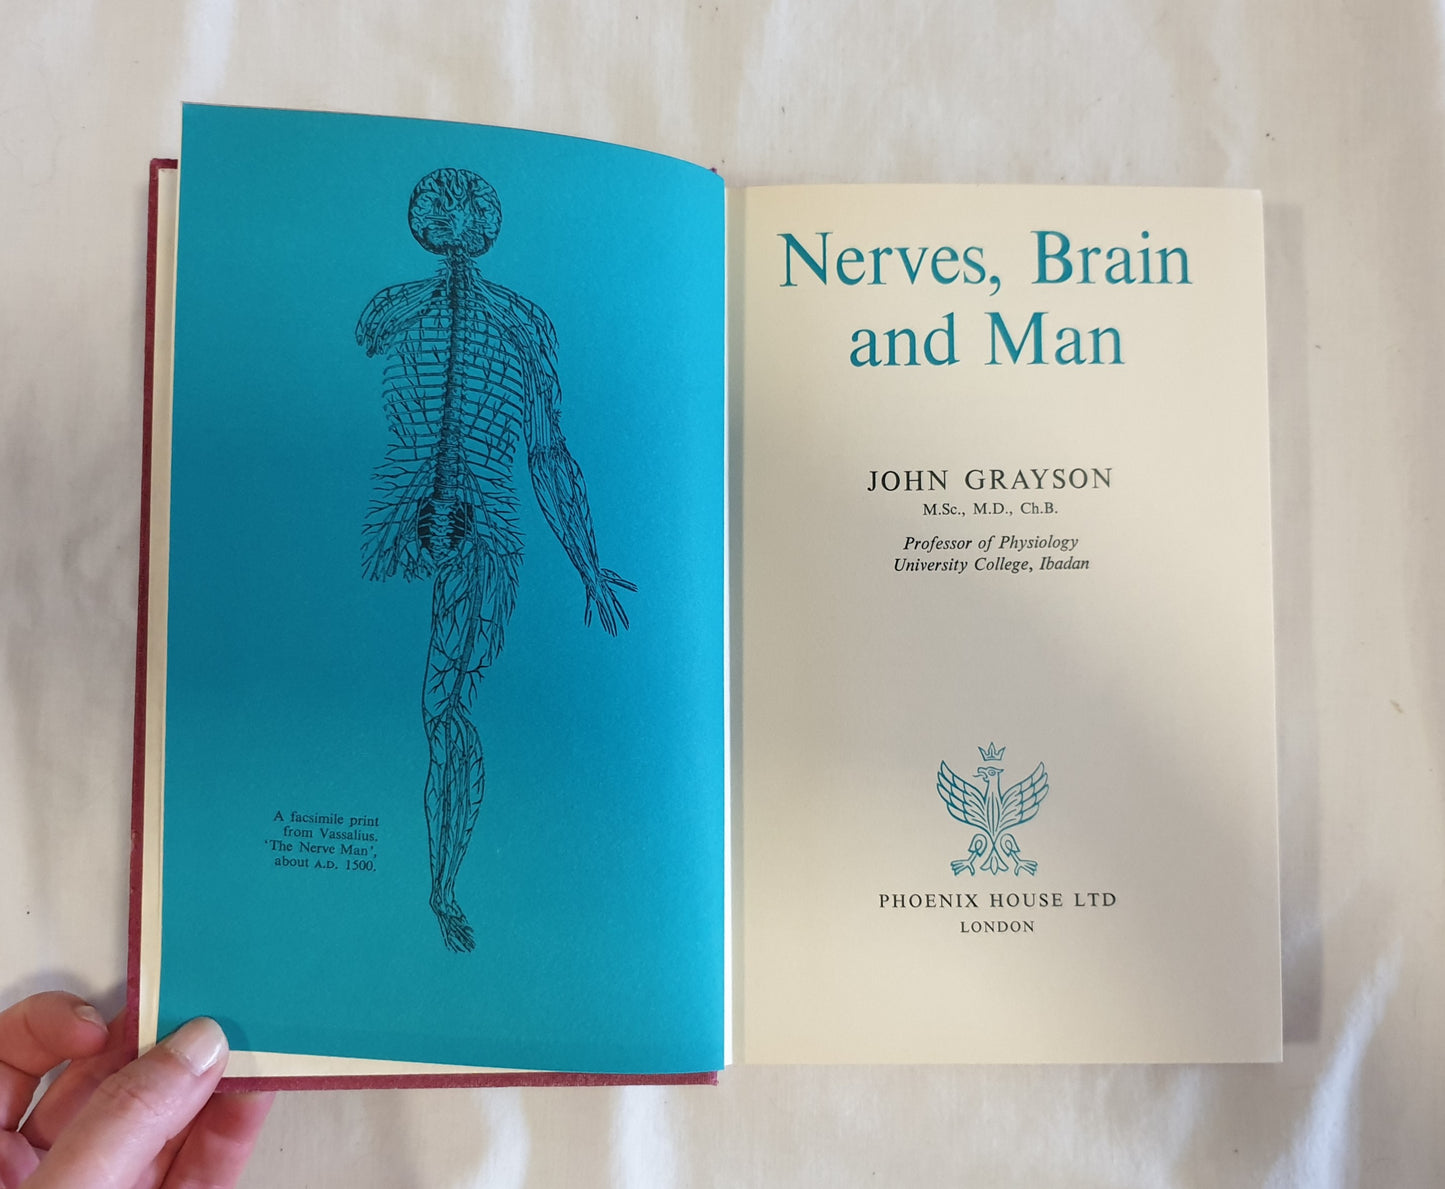 Nerves, Brain and Man by John Grayson